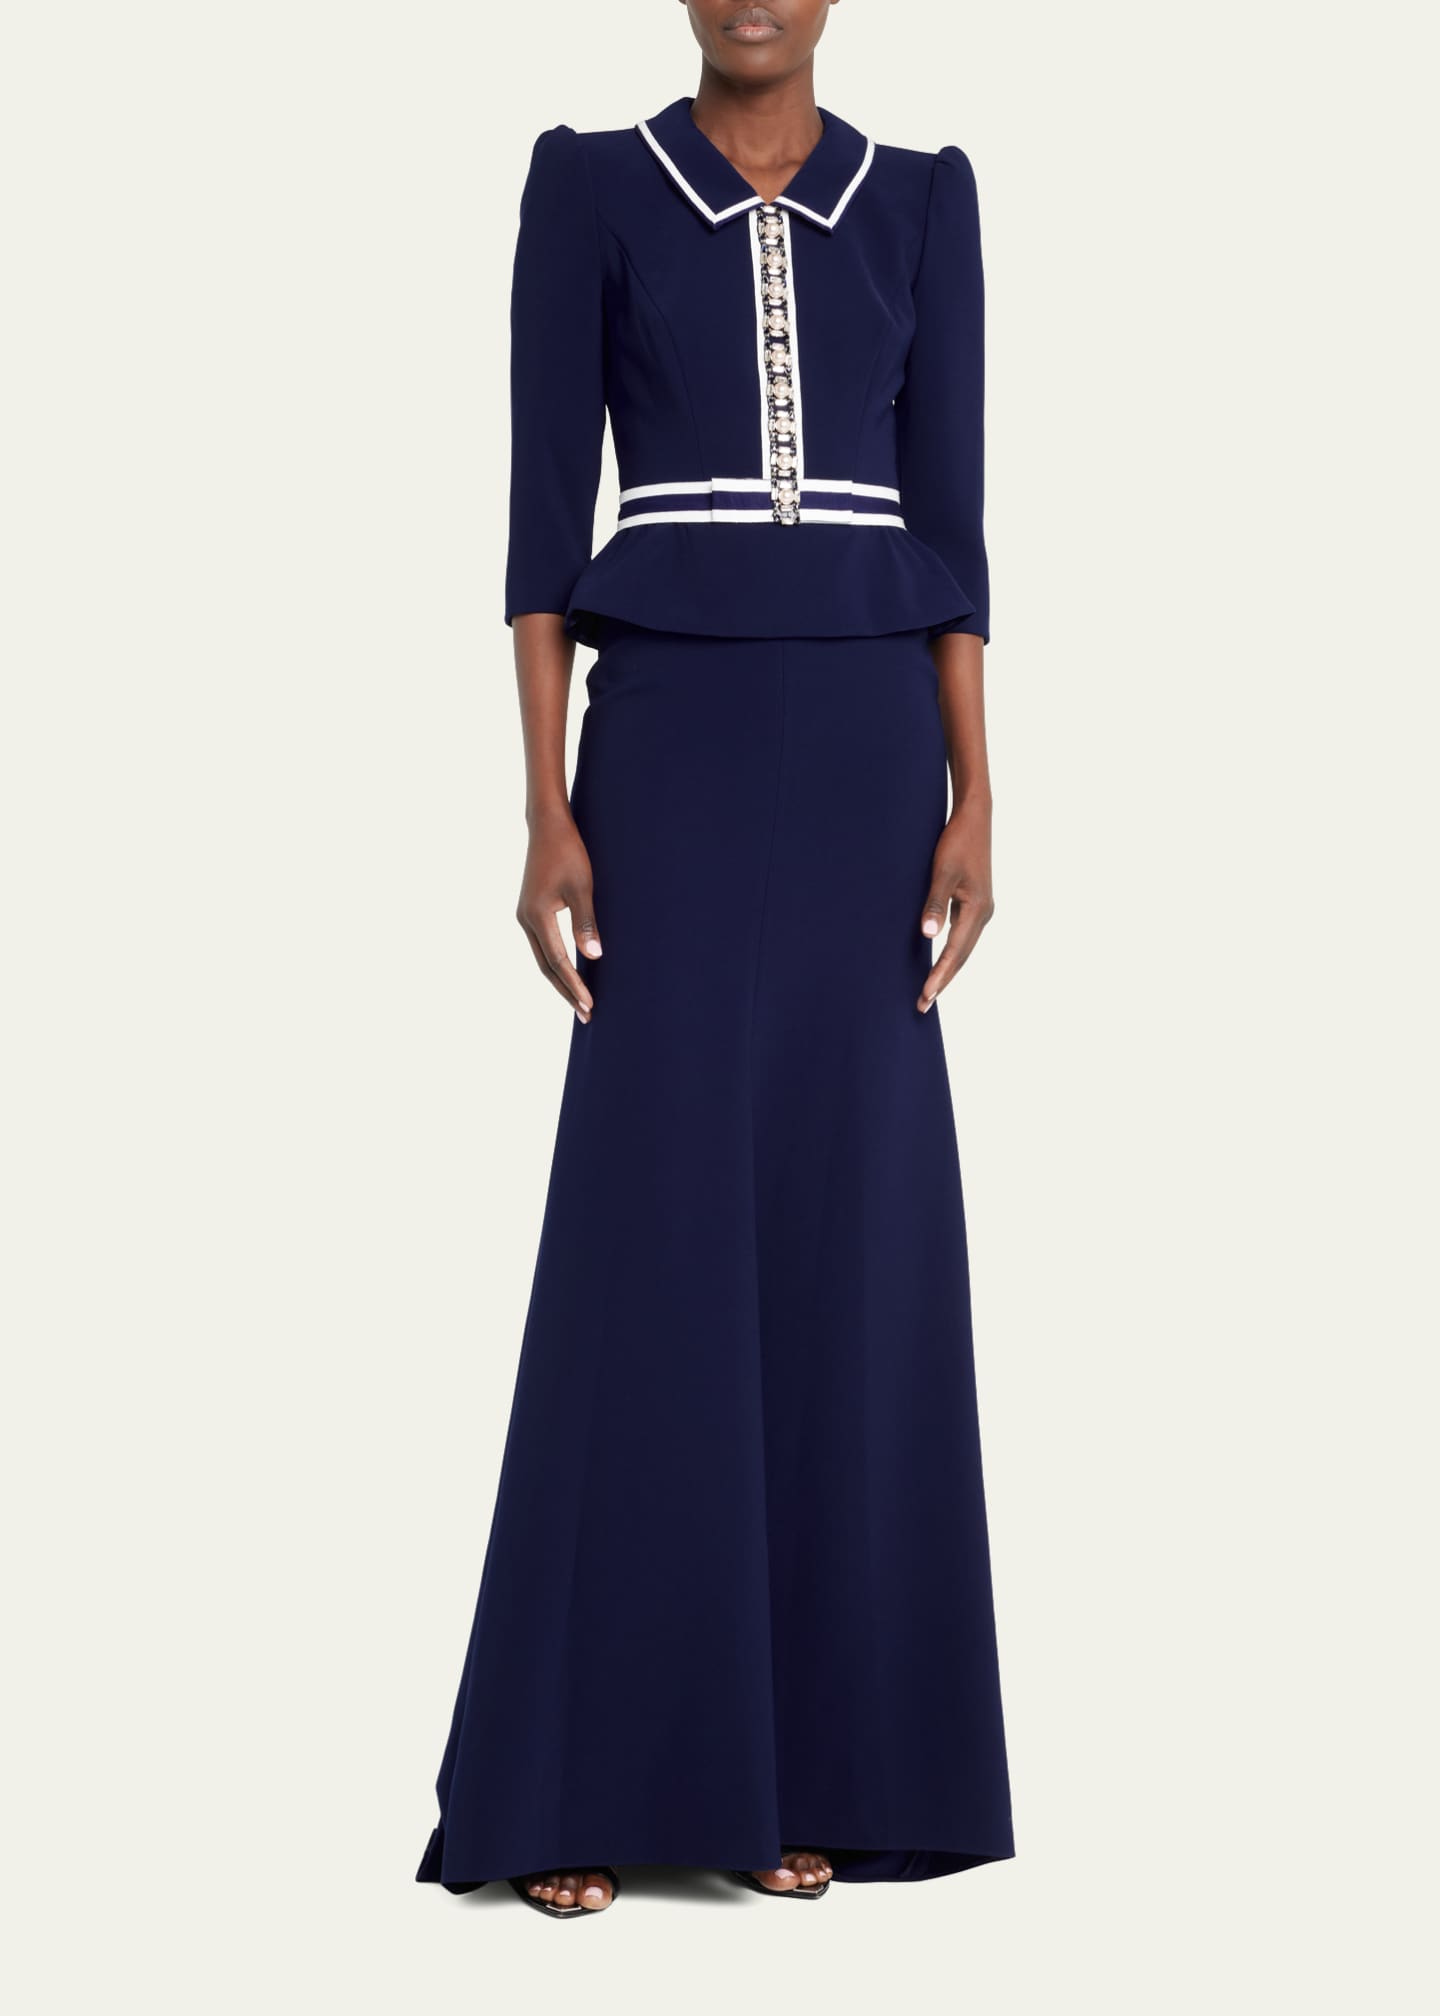 Jenny Packham Greta Embellished Fit-and-Flare Gown - Bergdorf Goodman